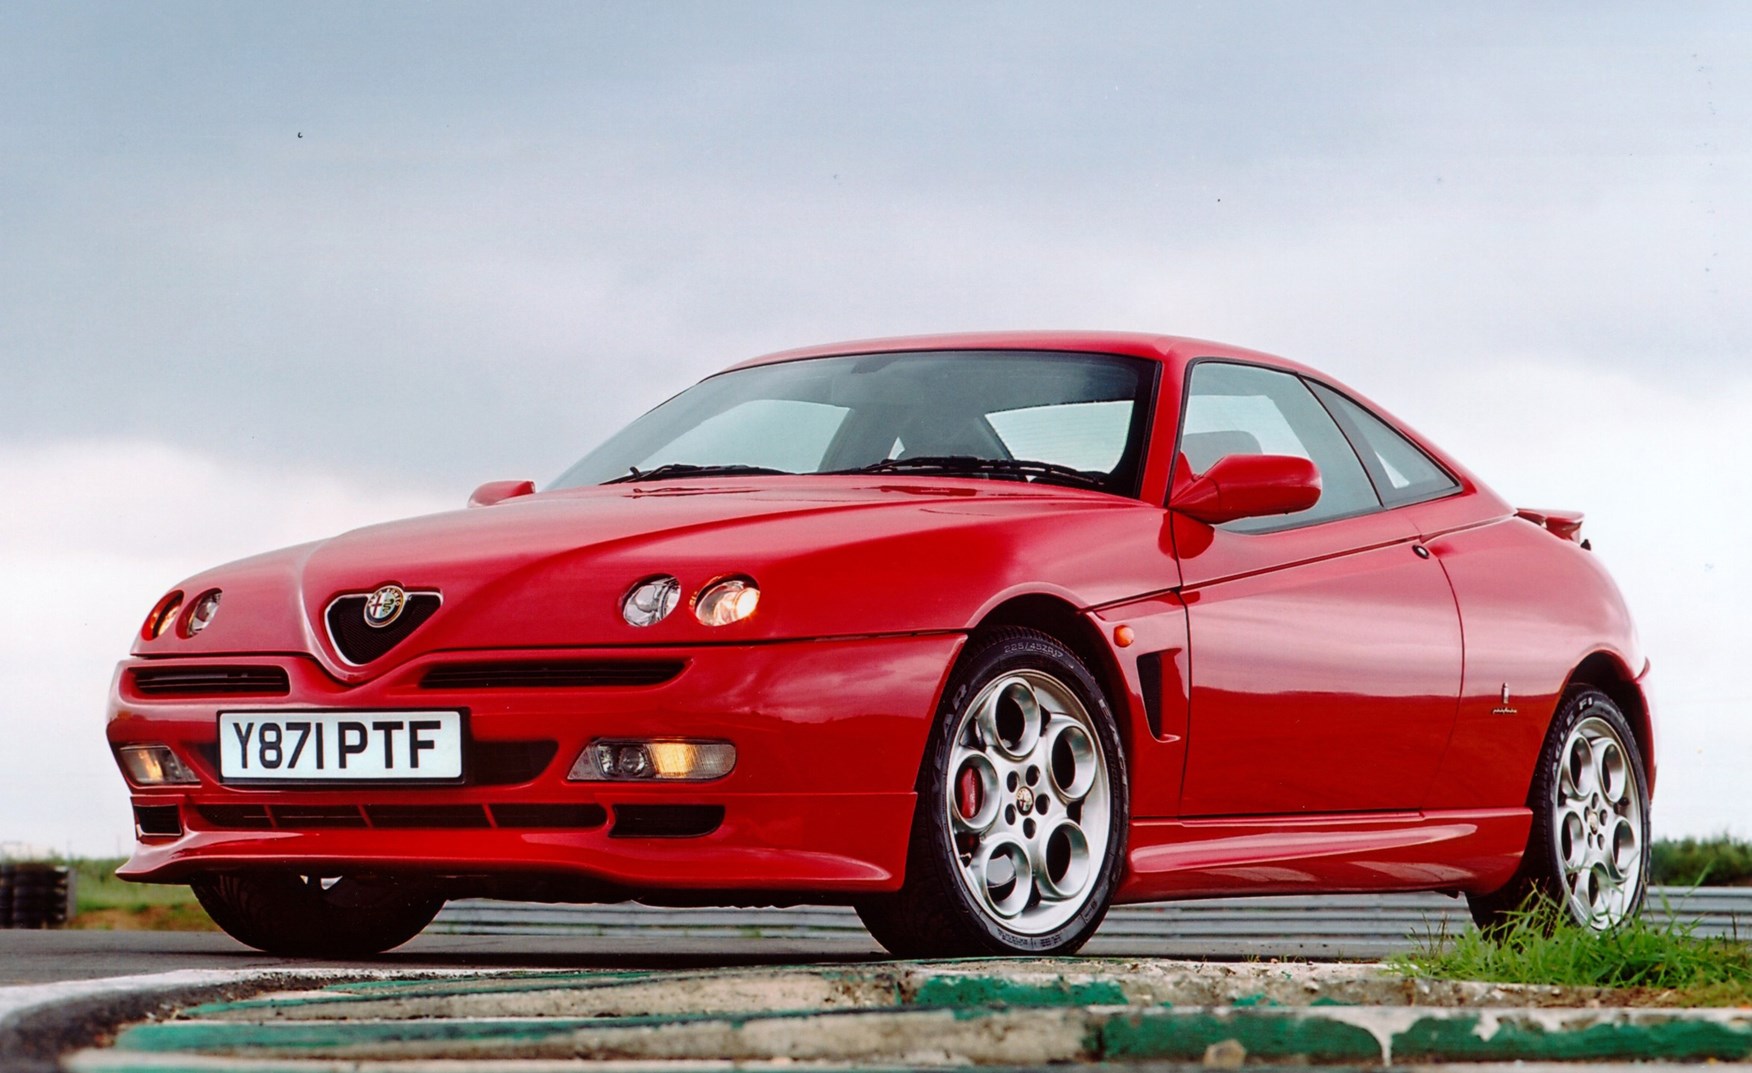 Alfa Romeo GTV Backgrounds on Wallpapers Vista